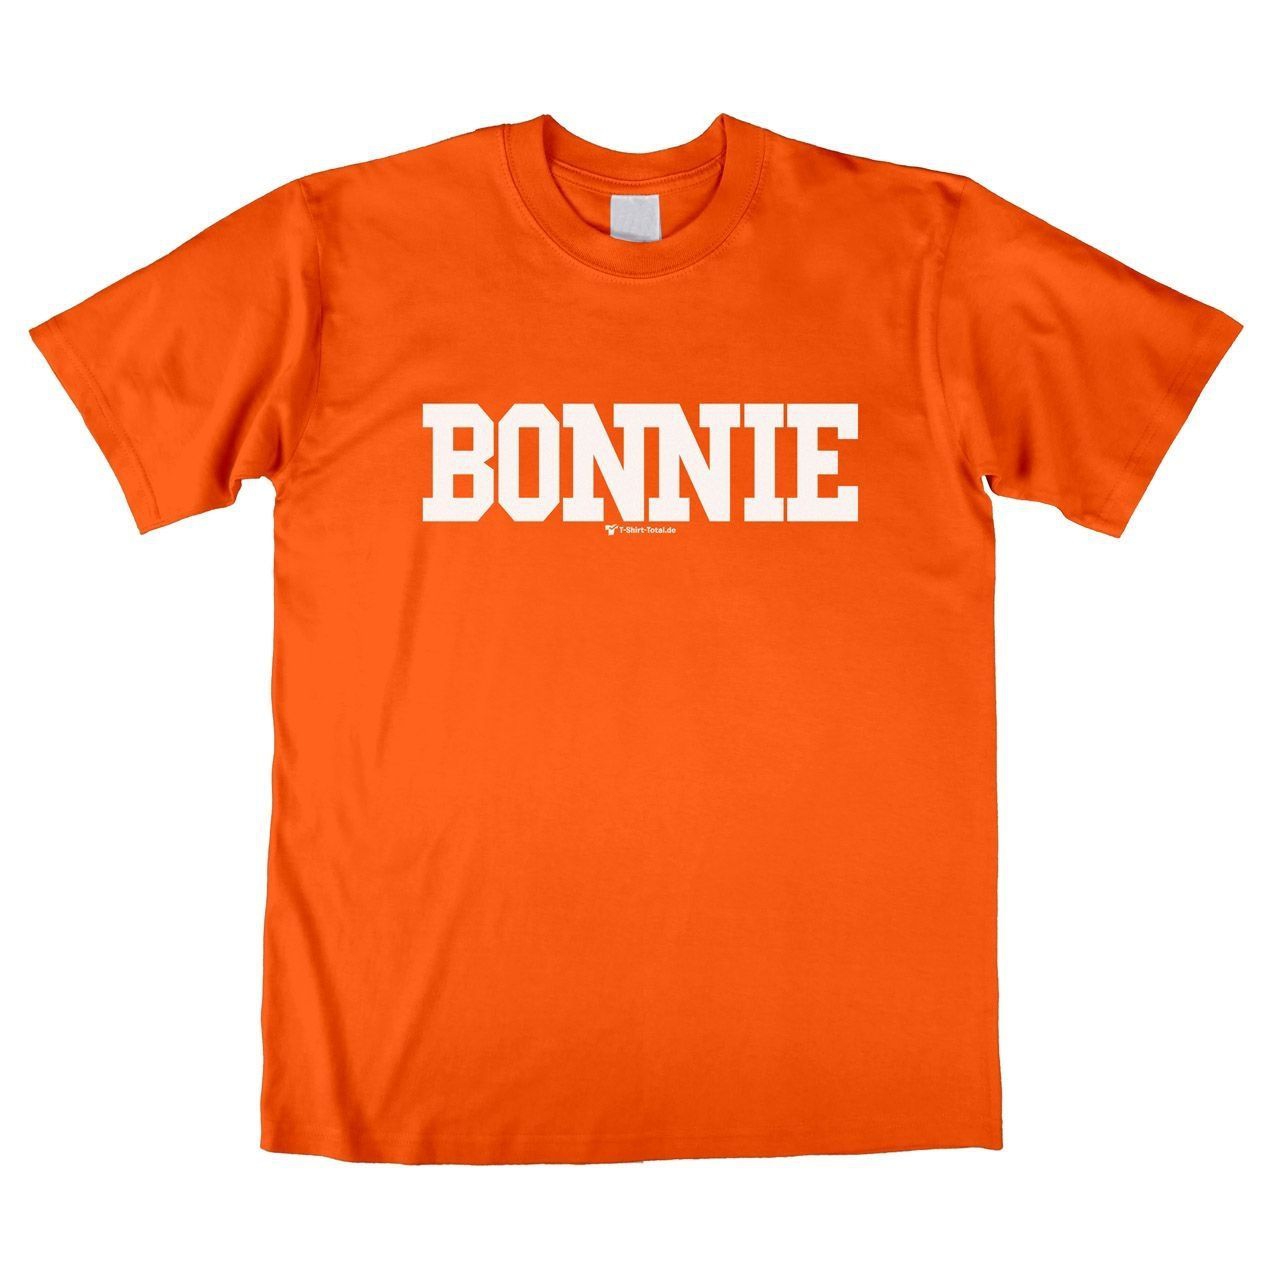 Bonnie Unisex T-Shirt orange Small